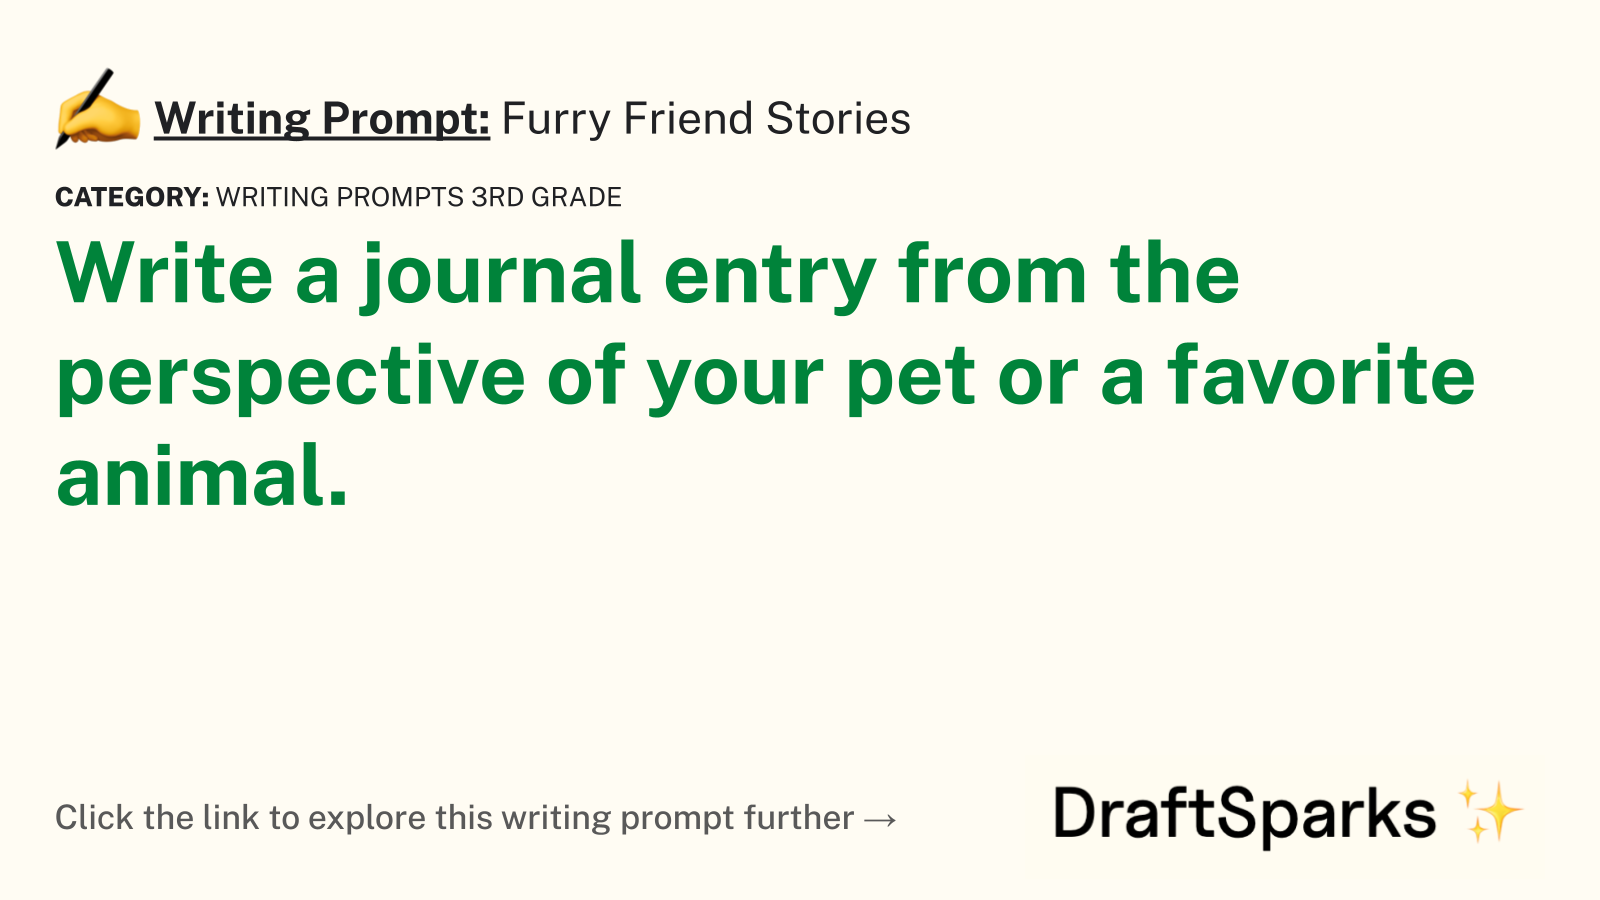 Furry Friend Stories